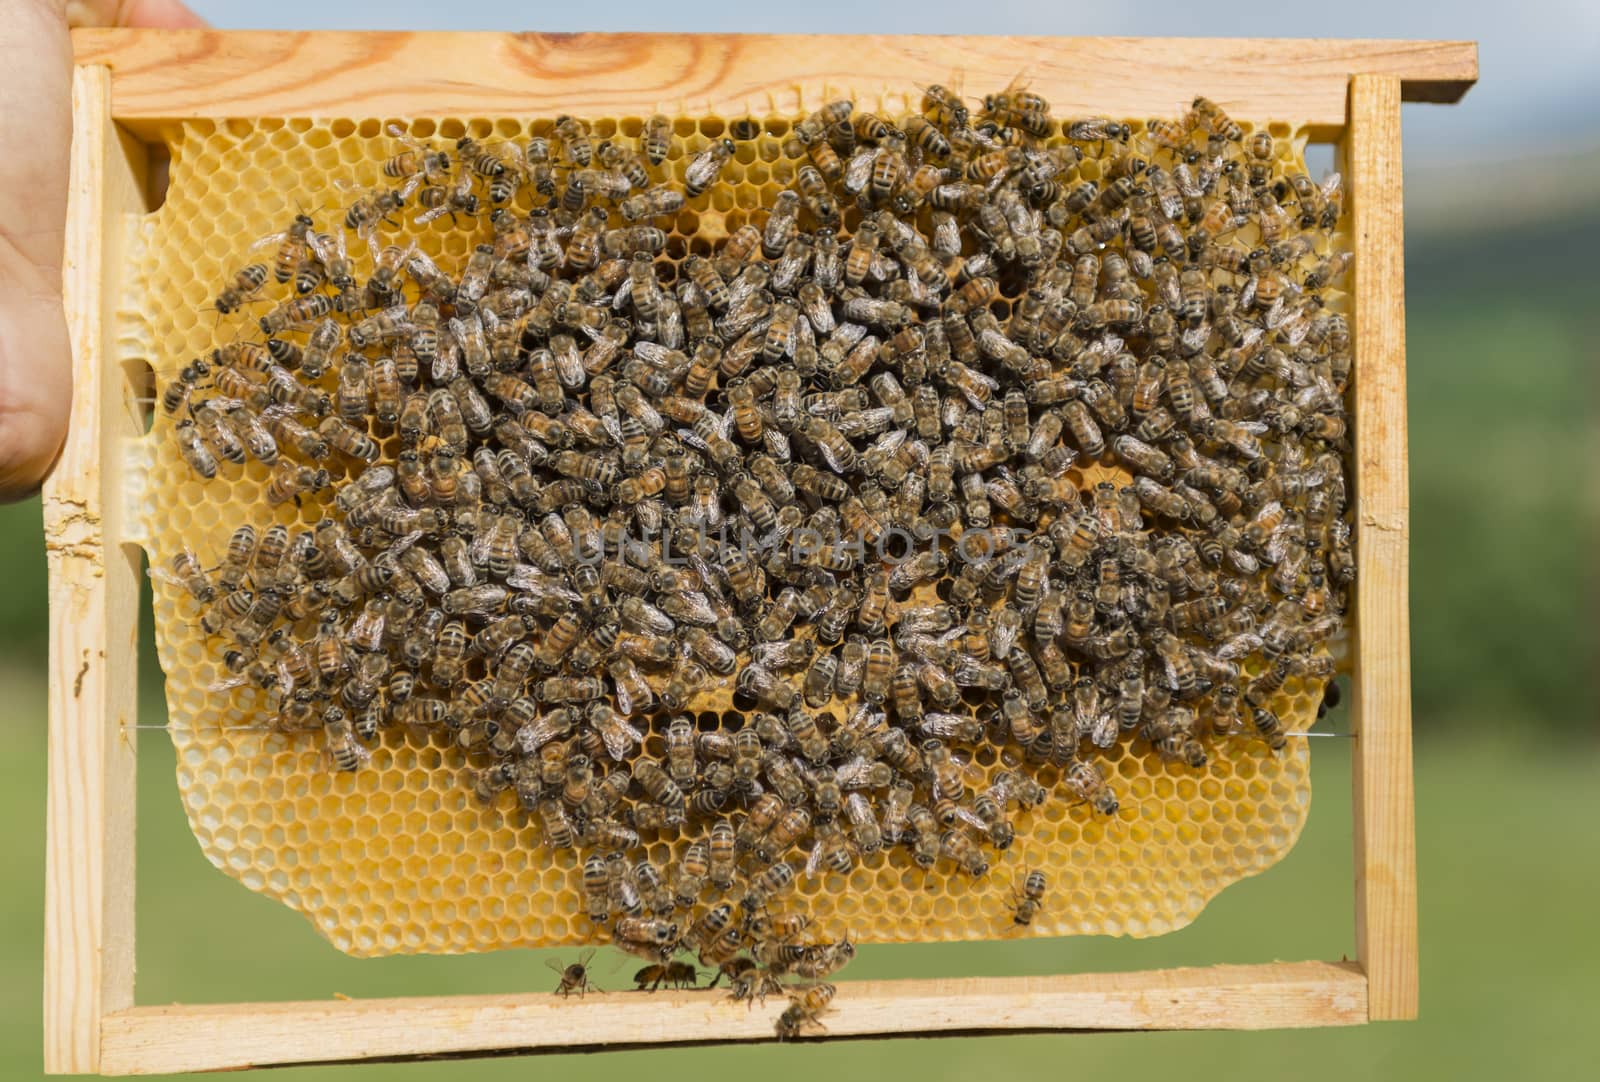 construction of natural honey